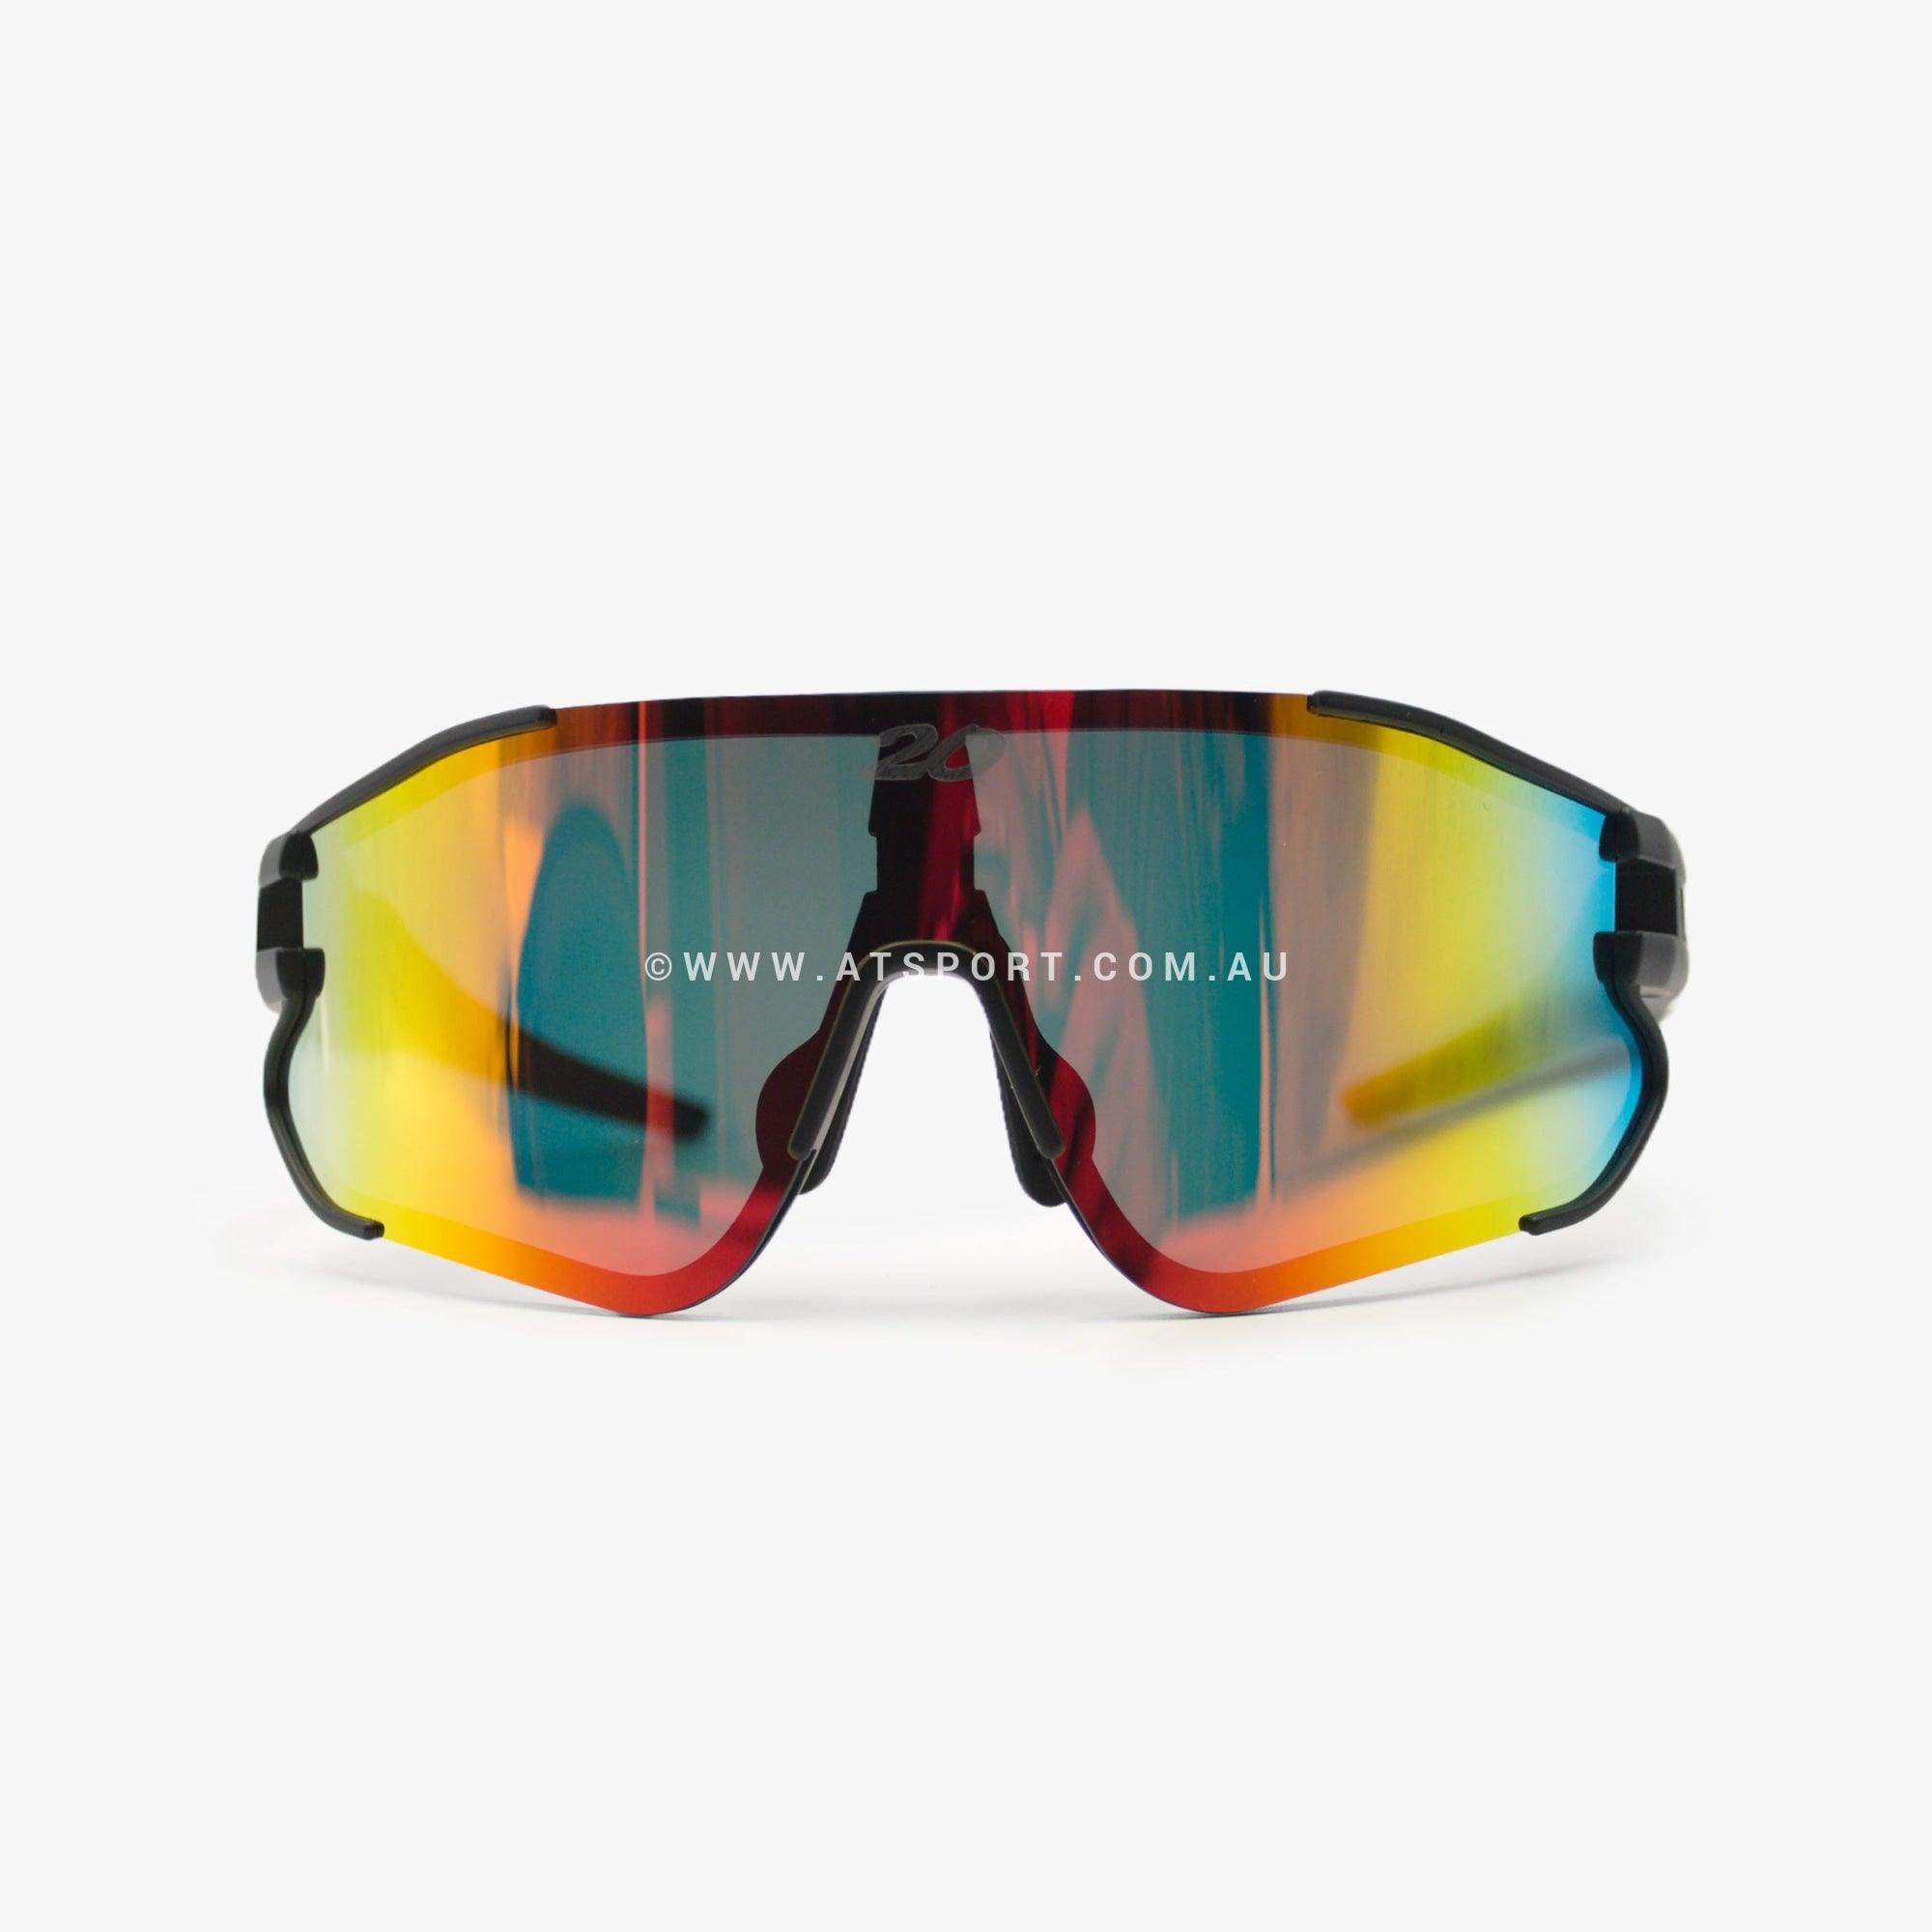 Twenty20 Vision T20 All-Rounder Cricket Sunglasses - AT Sports